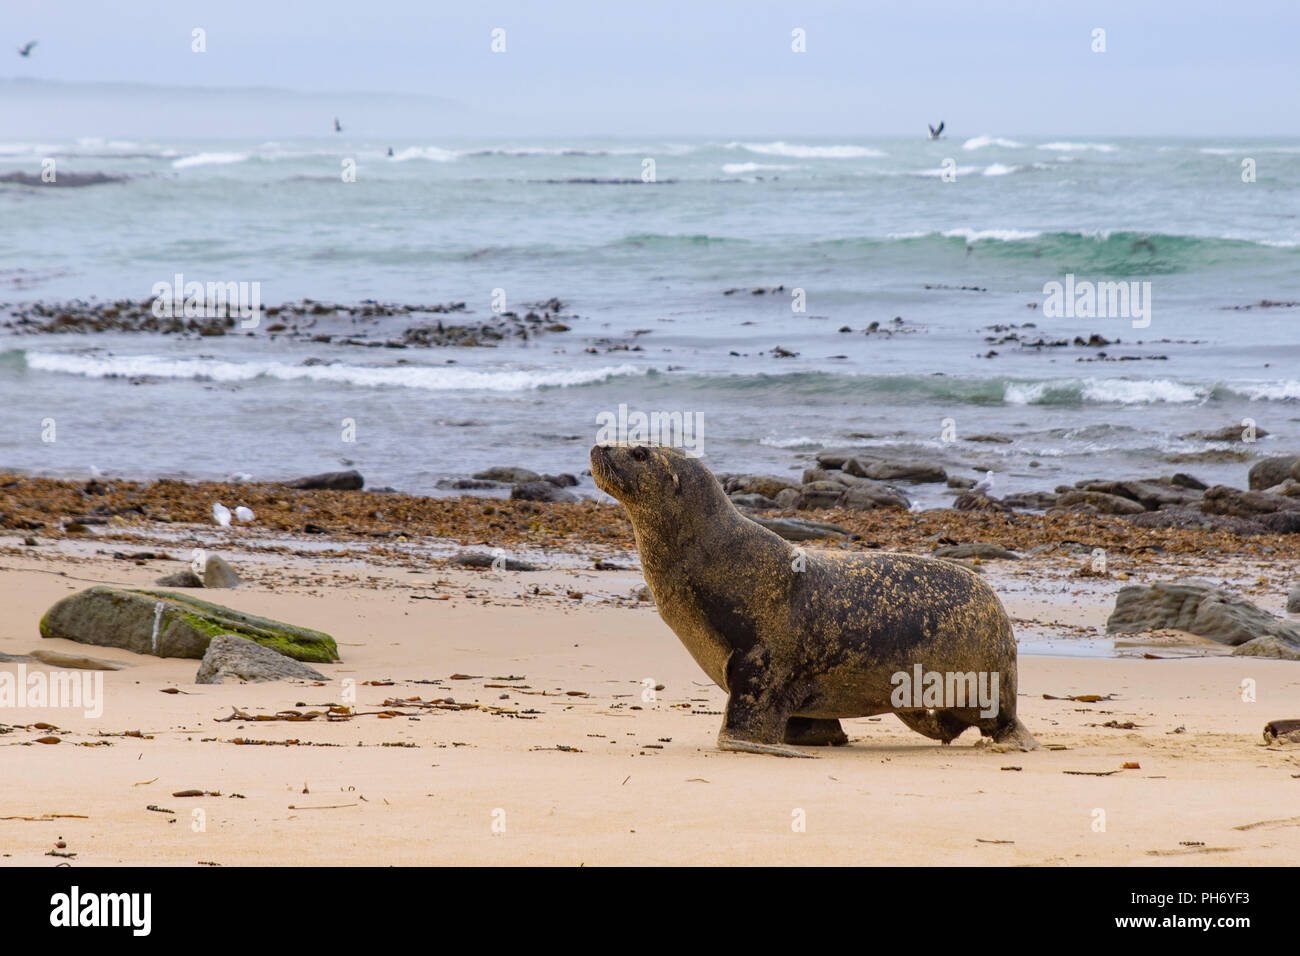 Sea lion on the beach at Catlins coast, South Island, New Zealand Stock Photo